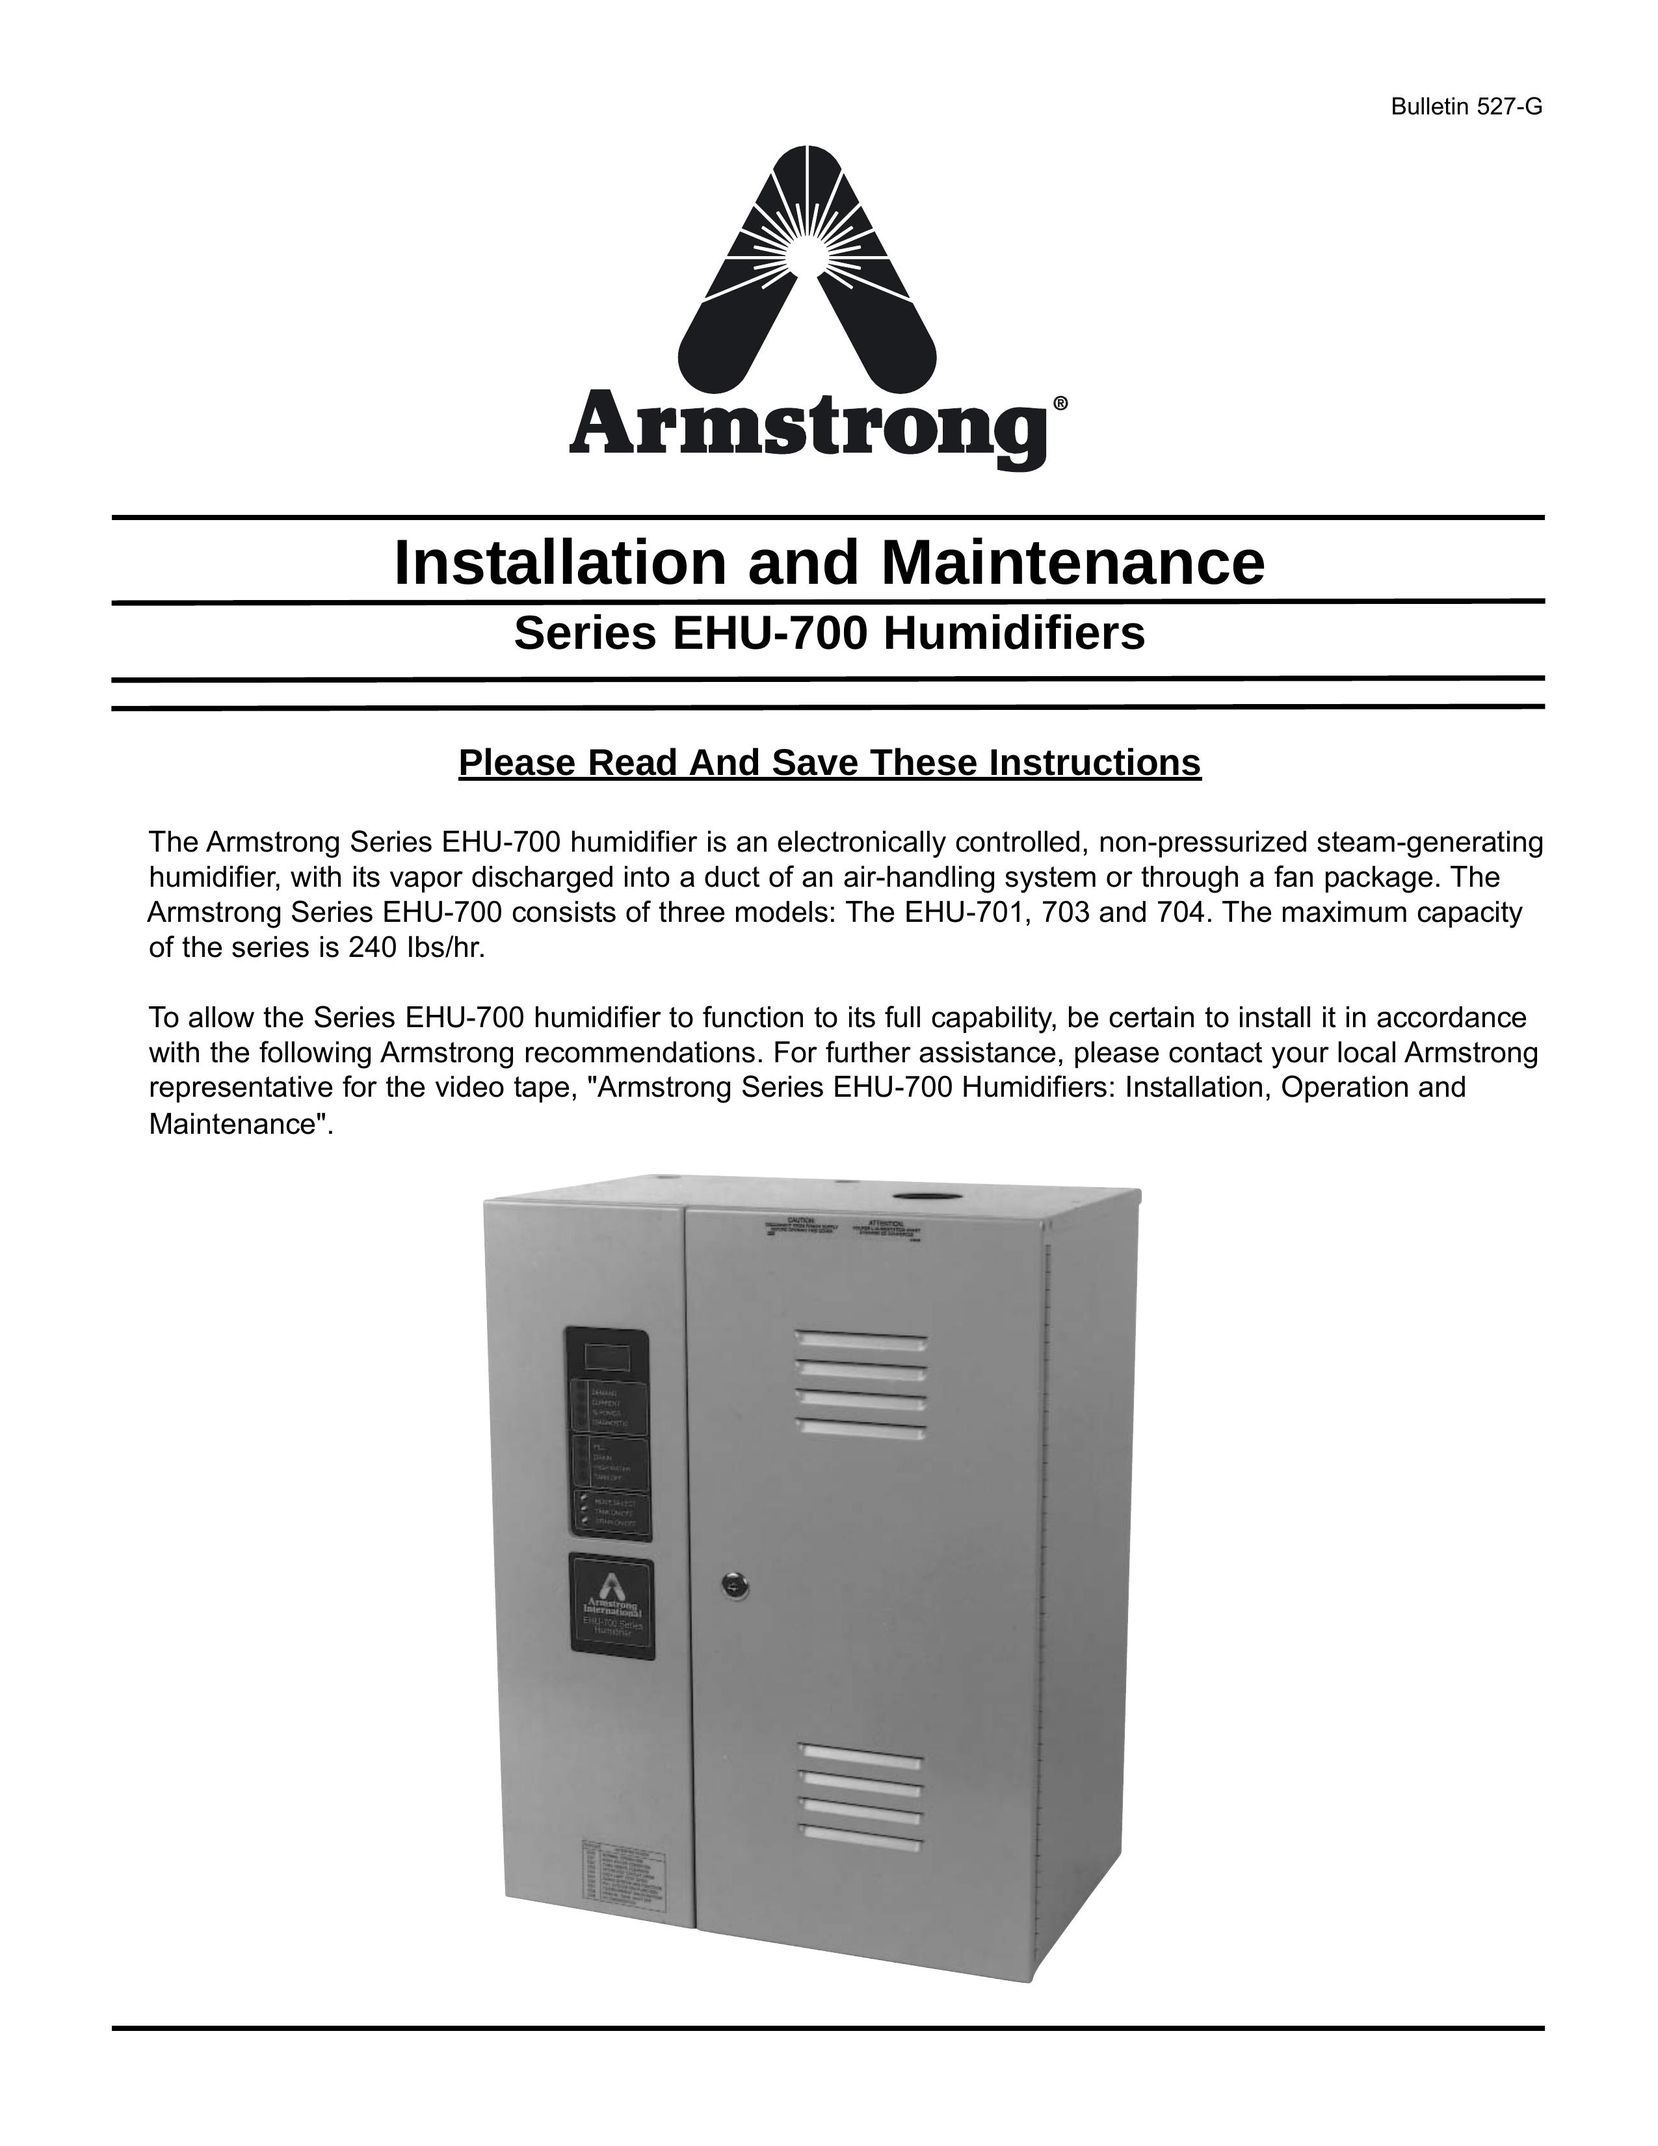 Armstrong World Industries EHU-701 Humidifier User Manual